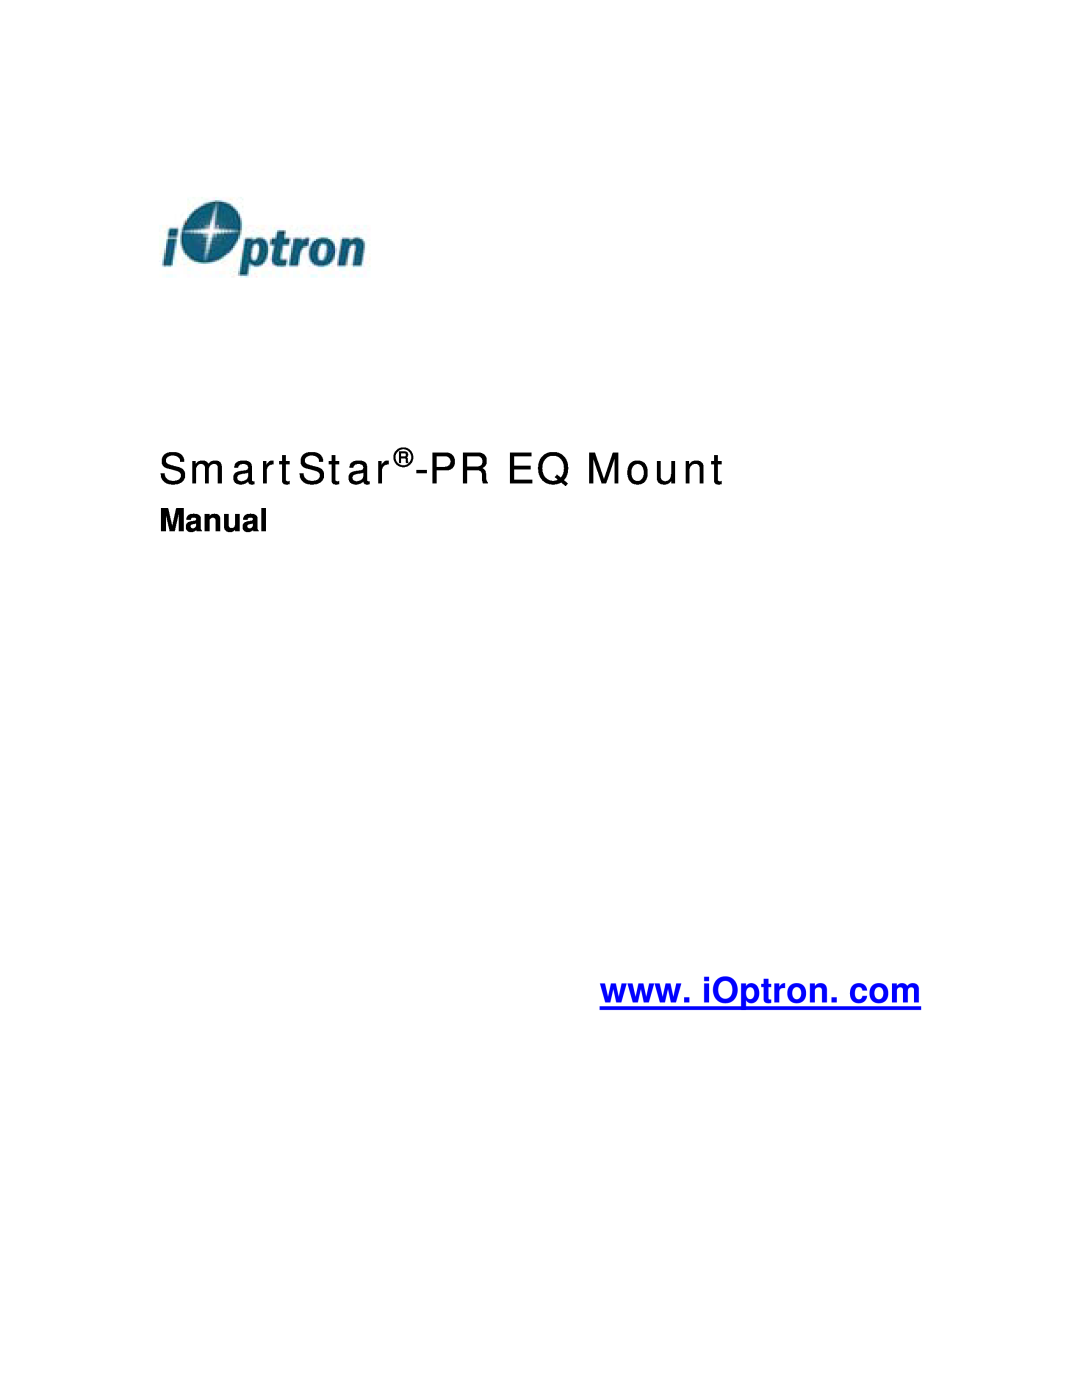 iOptron PR EQ manual SmartStar-PREQ Mount, Manual 